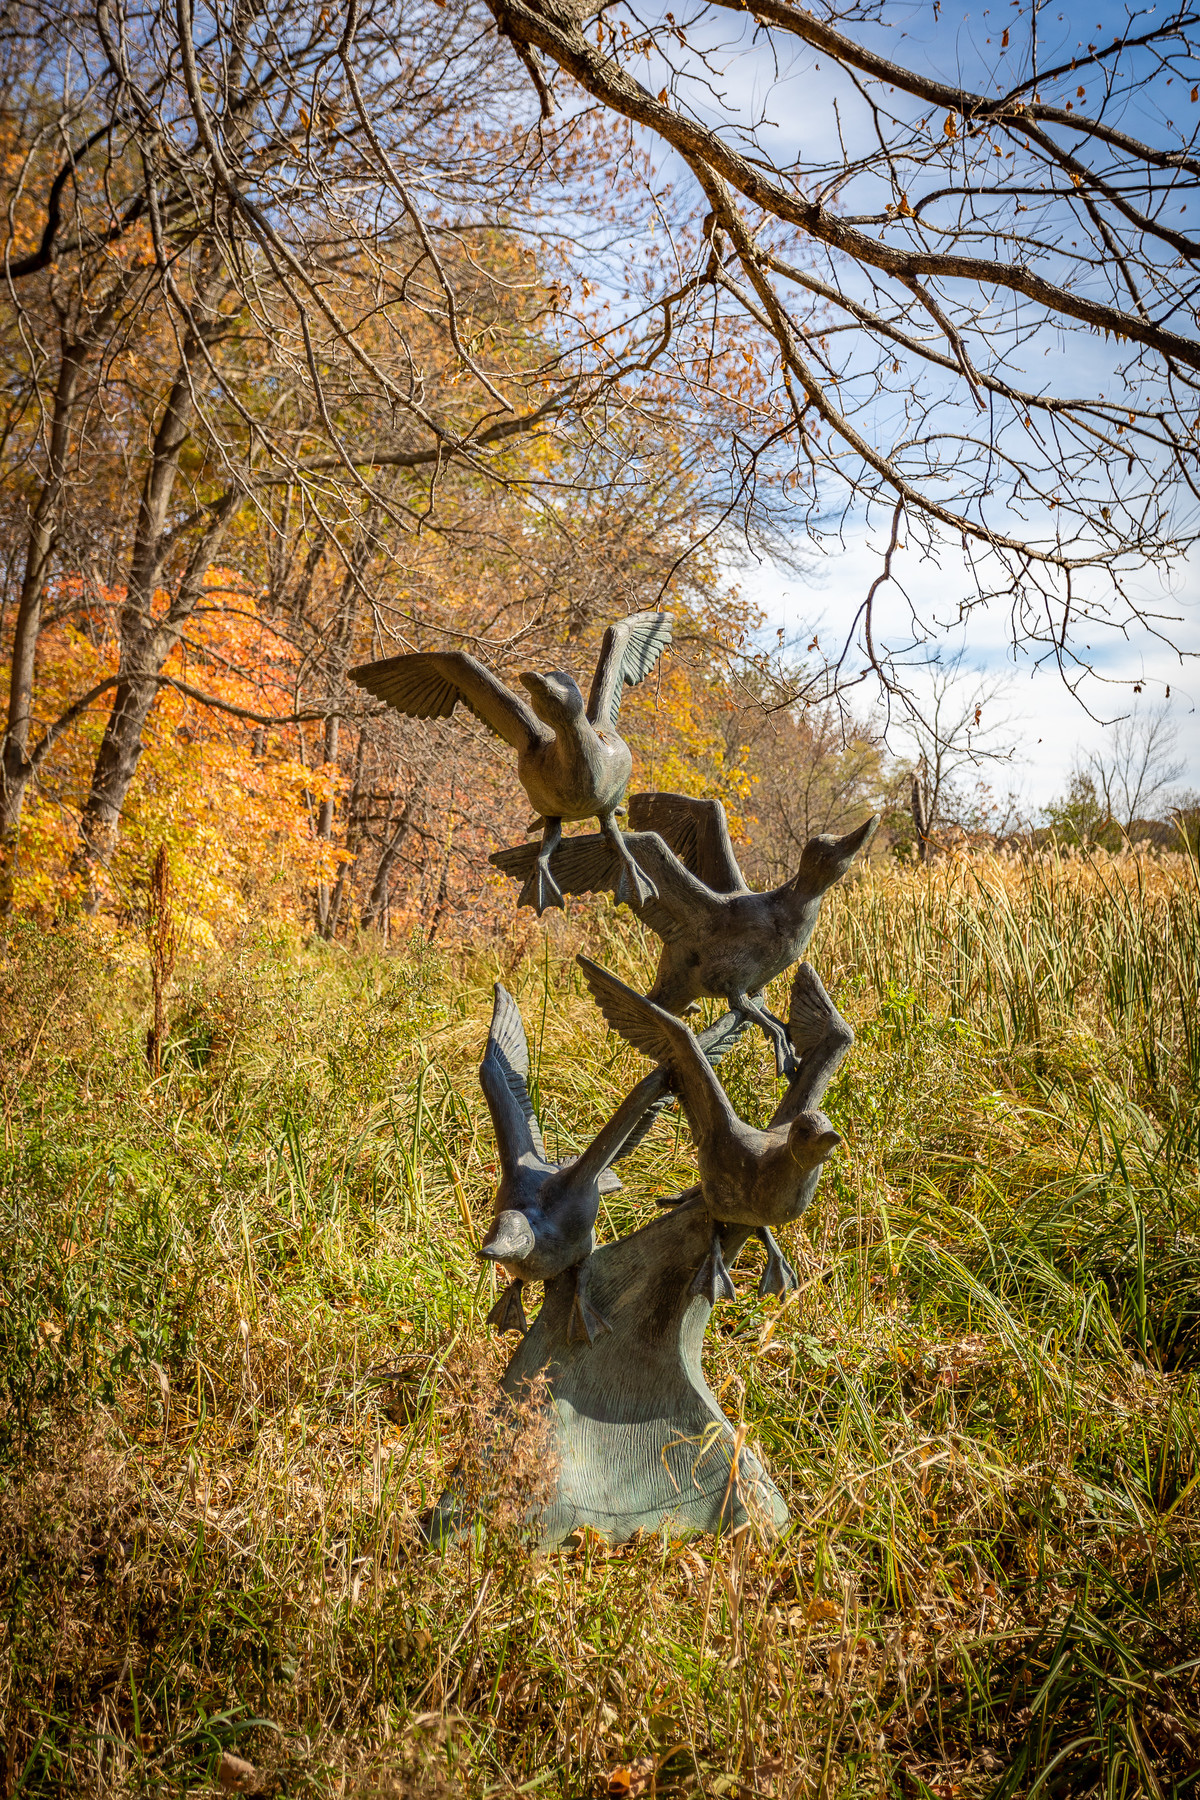 Birds in flight sculpture in the fall